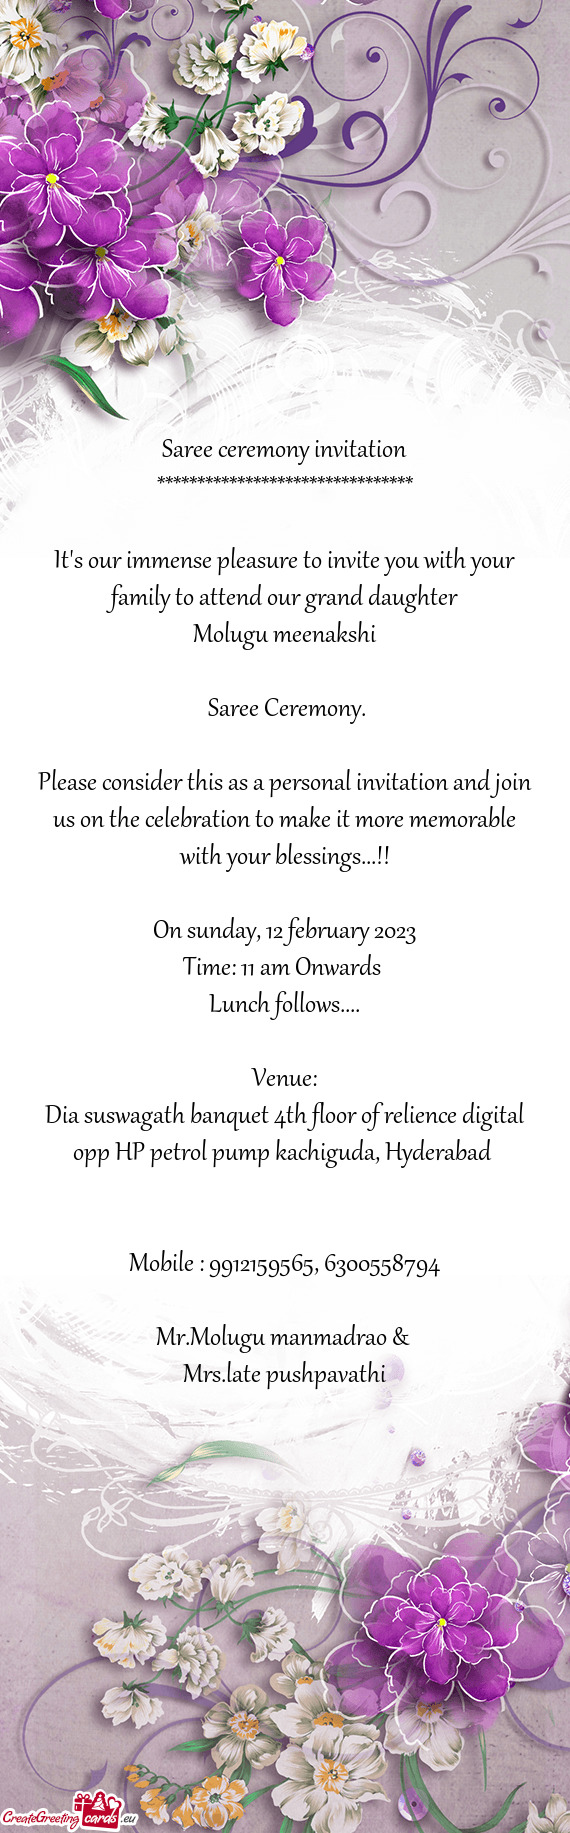 Dia suswagath banquet 4th floor of relience digital opp HP petrol pump kachiguda, Hyderabad